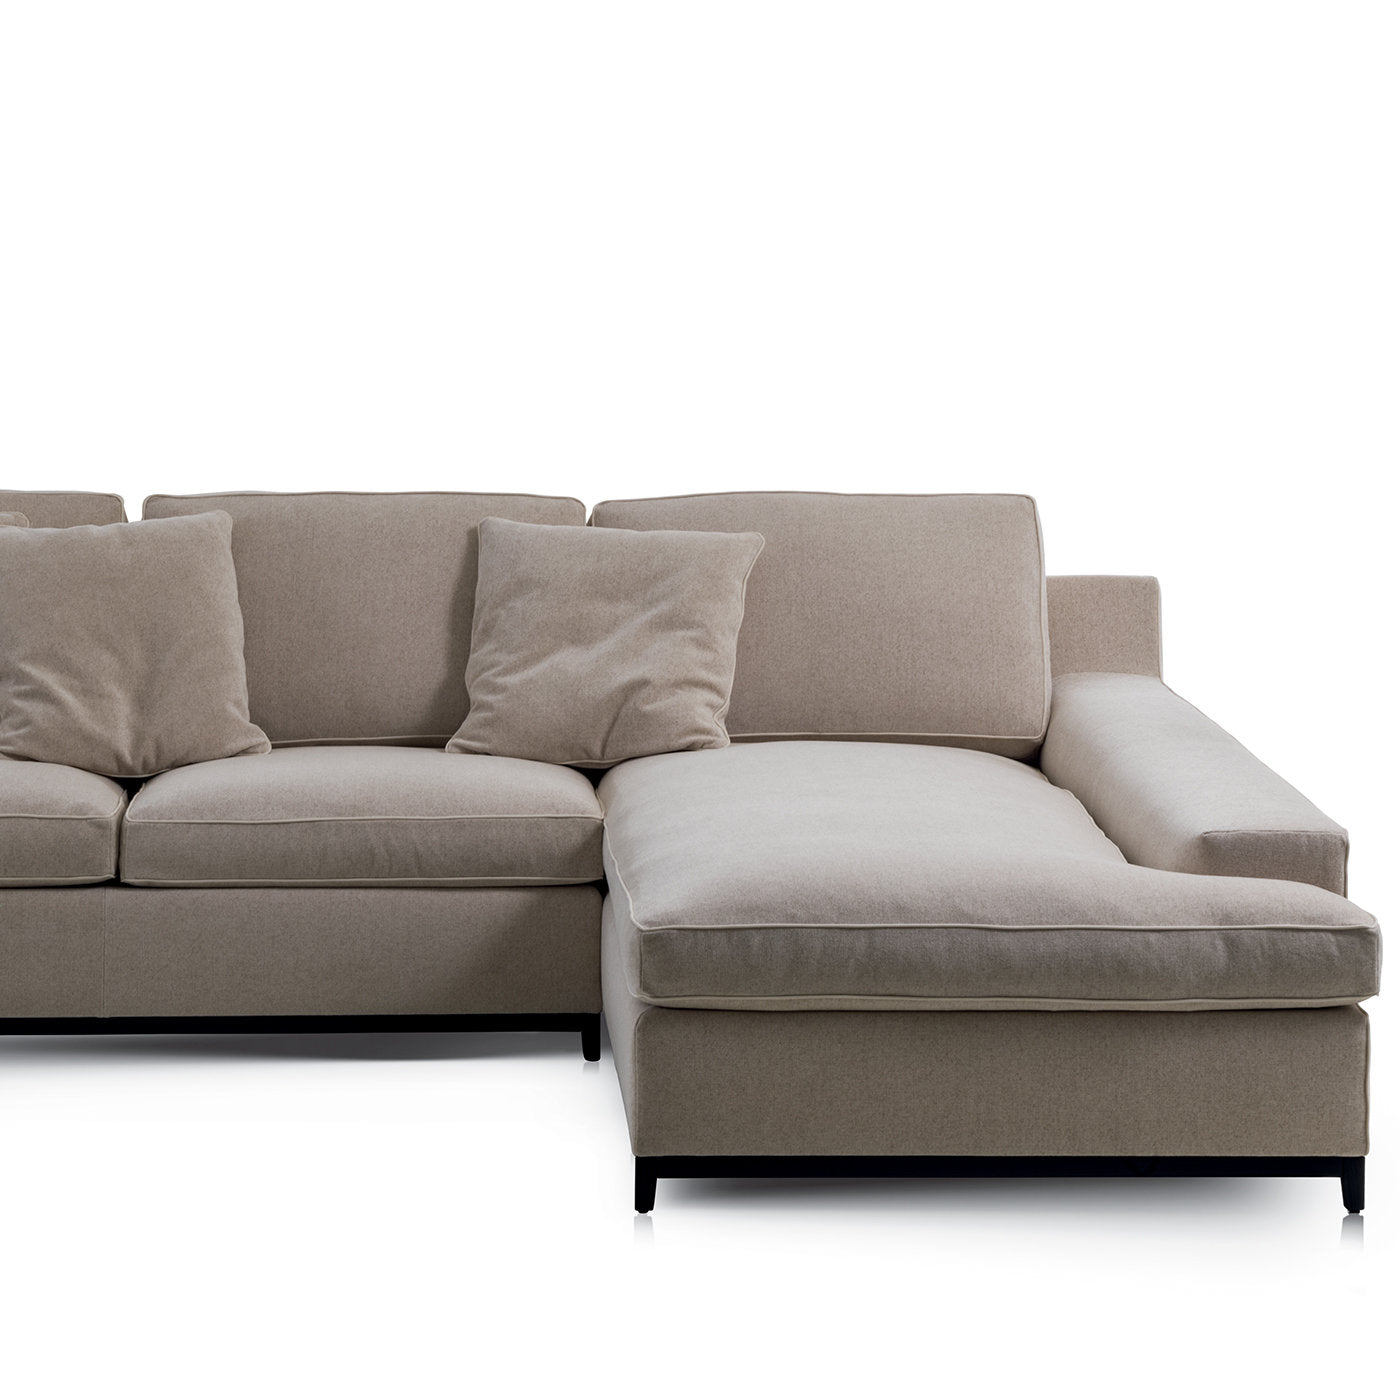 Hugo modular sofa - Alternative view 1